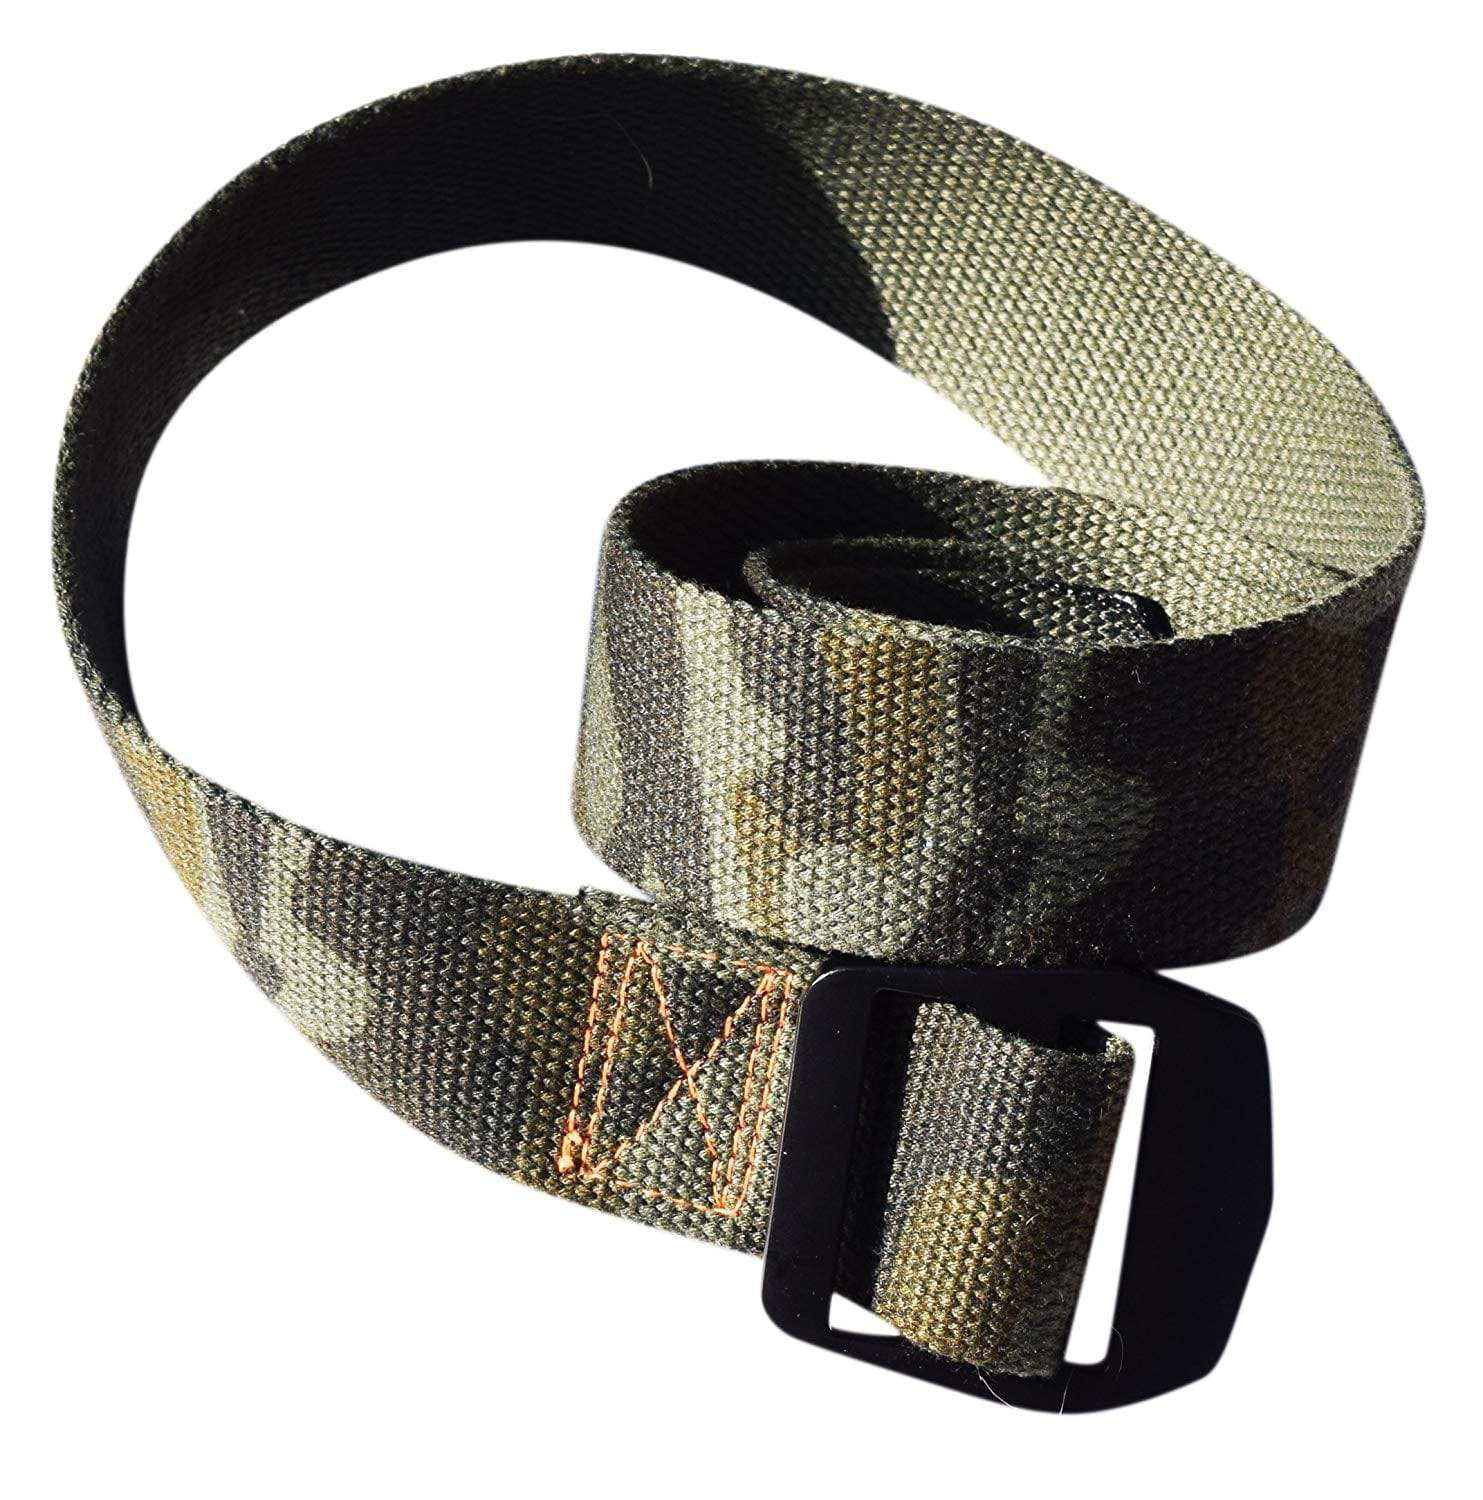 Cut for custom fit Unisex Premium Nylon Cotton Blend Web Belt-Military Style 